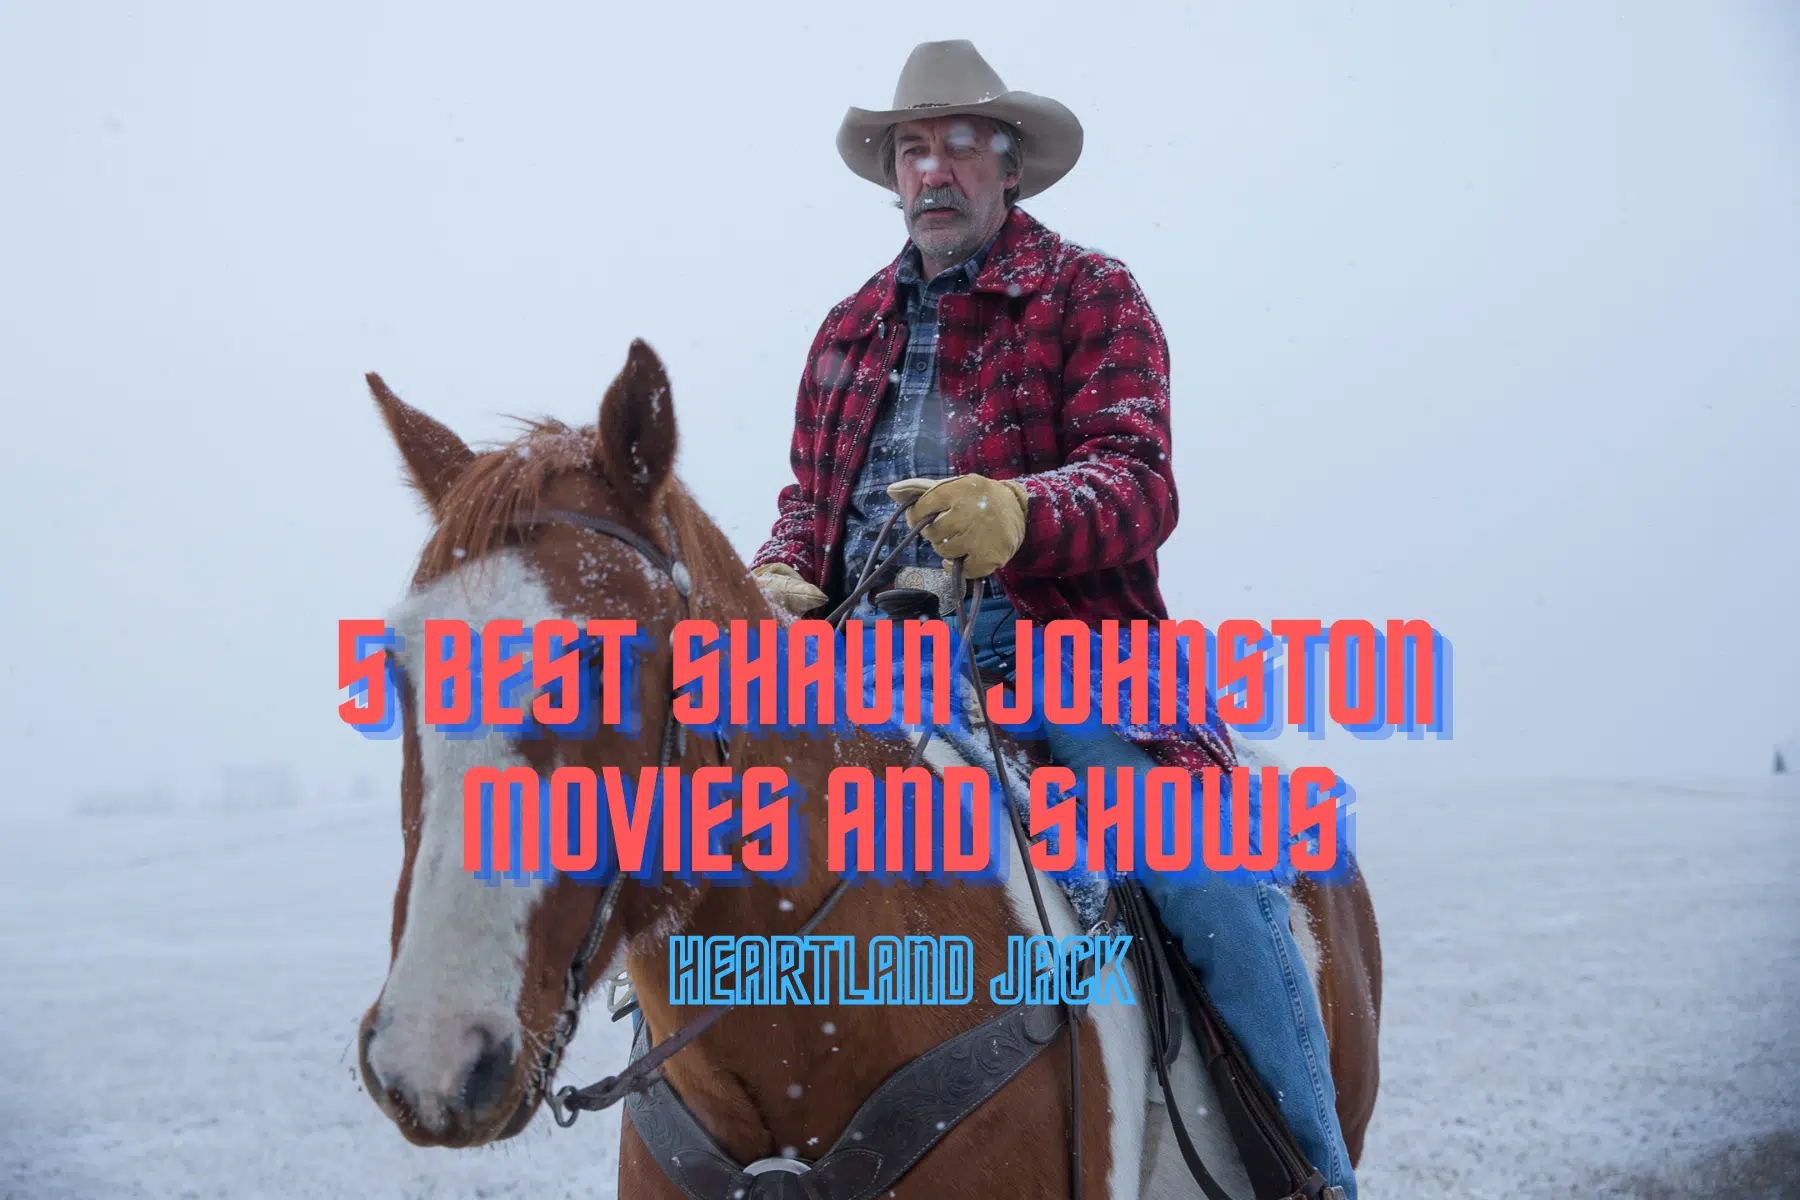 5 Best Shaun Johnston Movies Ranked - Heartland Jack